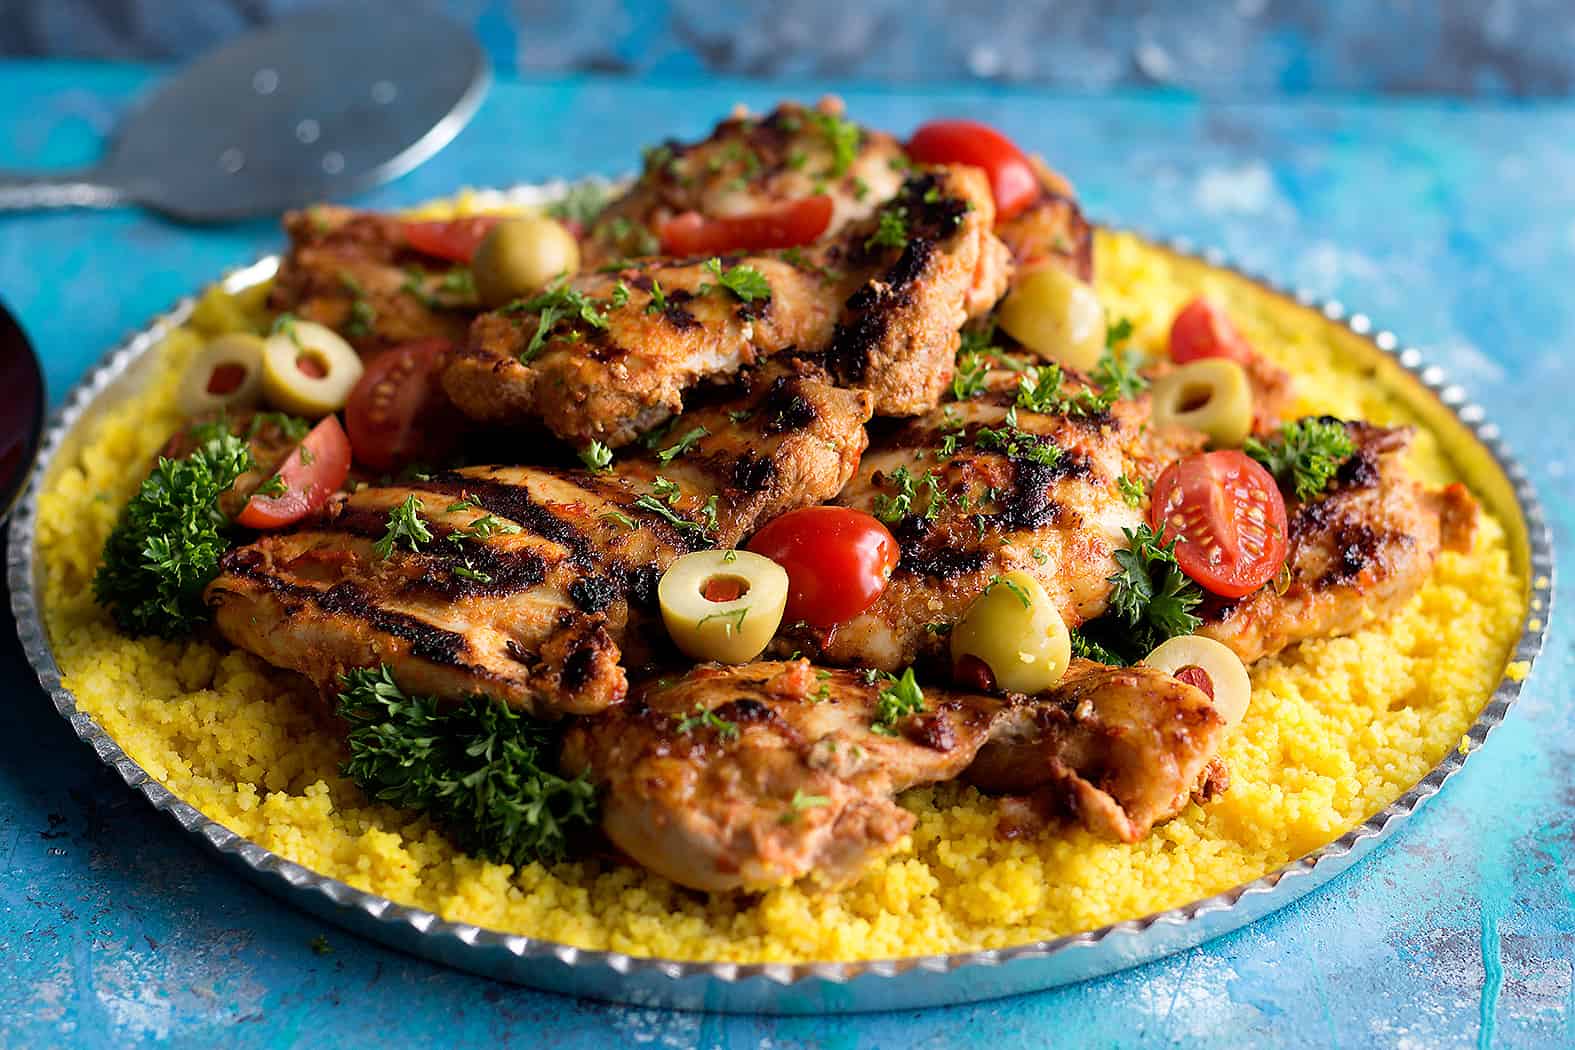 Serve Moroccan harissa chicken with saffron couscous